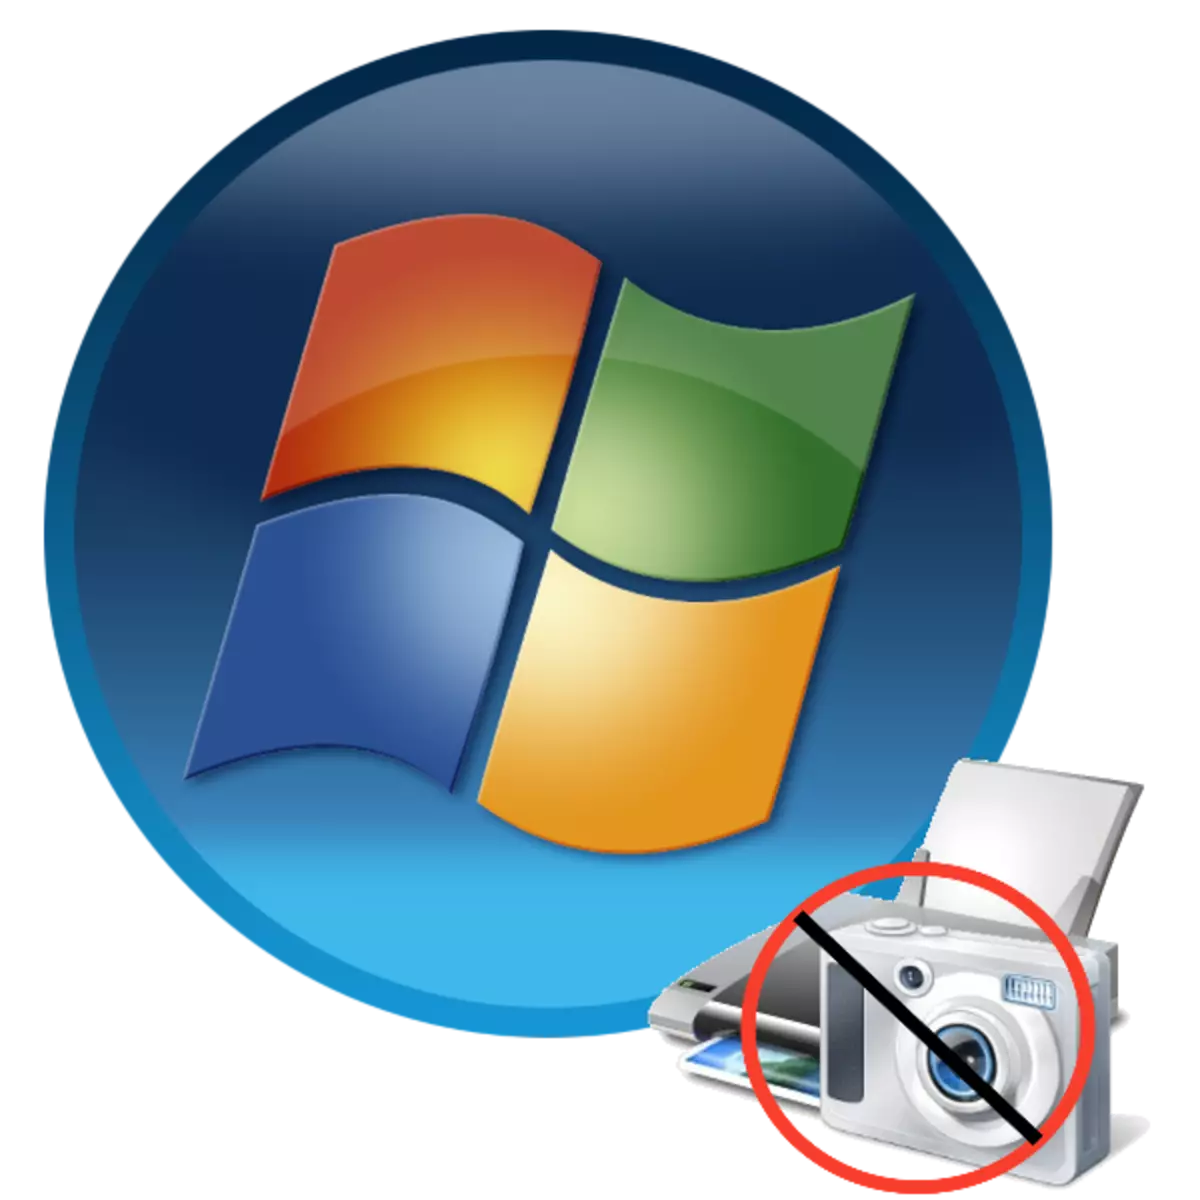 Windows 7でデバイスやプリンタを開かないでください